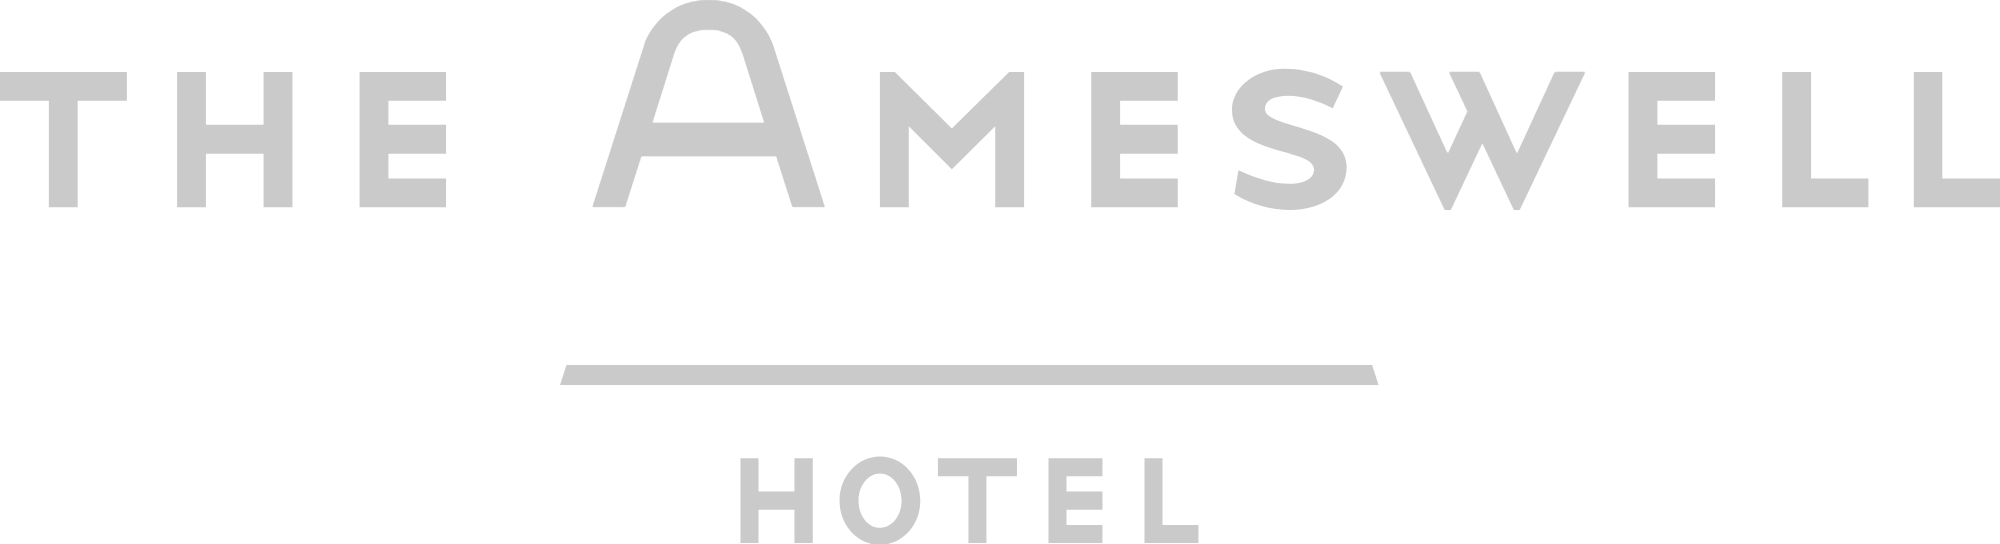 Ameswell logo